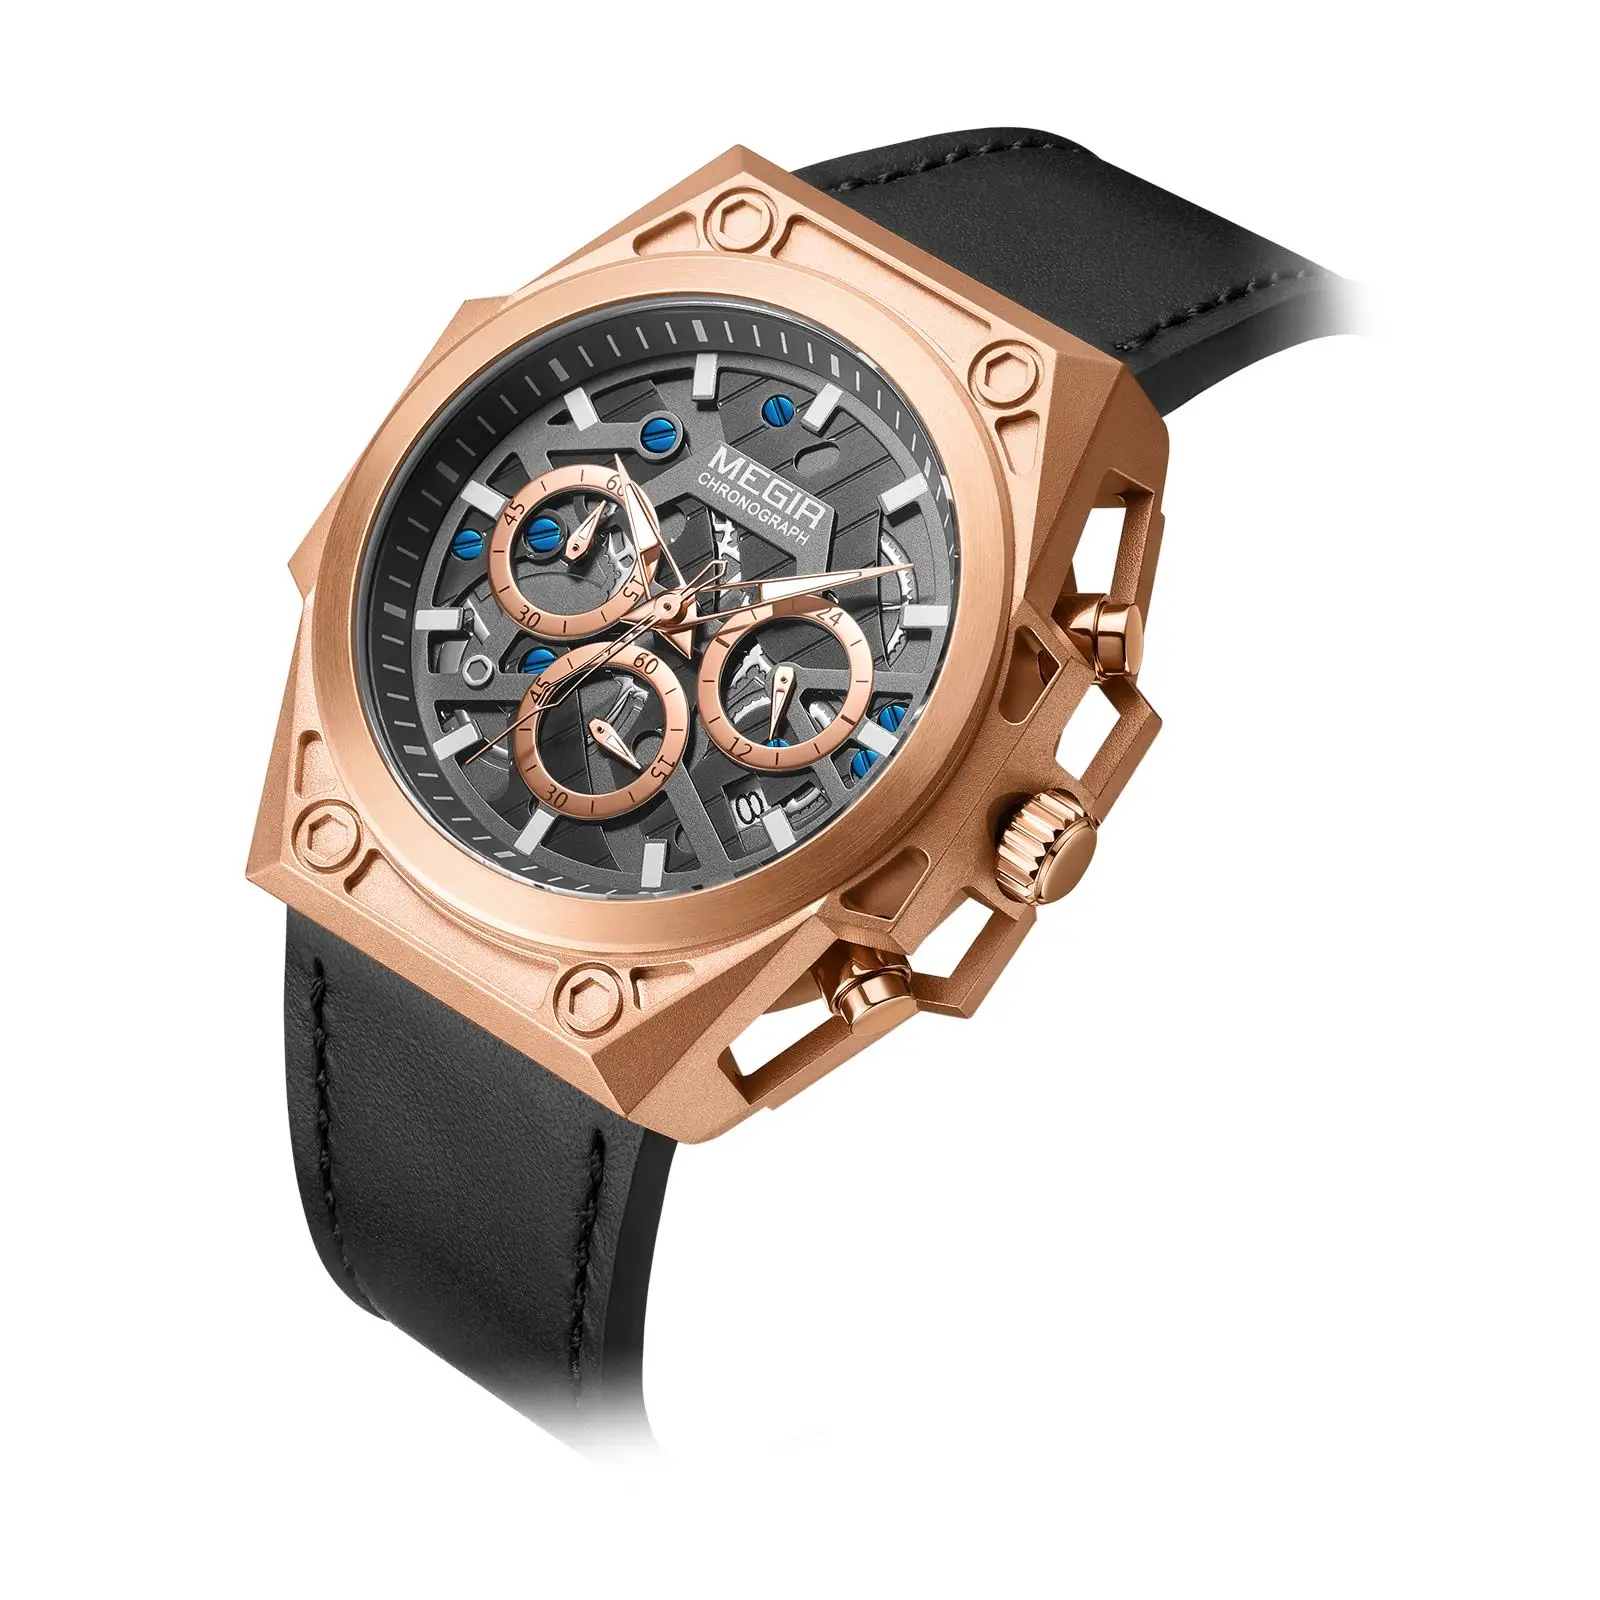 

Reloj Hombre 5 ATM Waterproof Men's Watches Stainless Steel Luxury Men Wrist Chronograph Racing Watch, Black, rose gold, silver